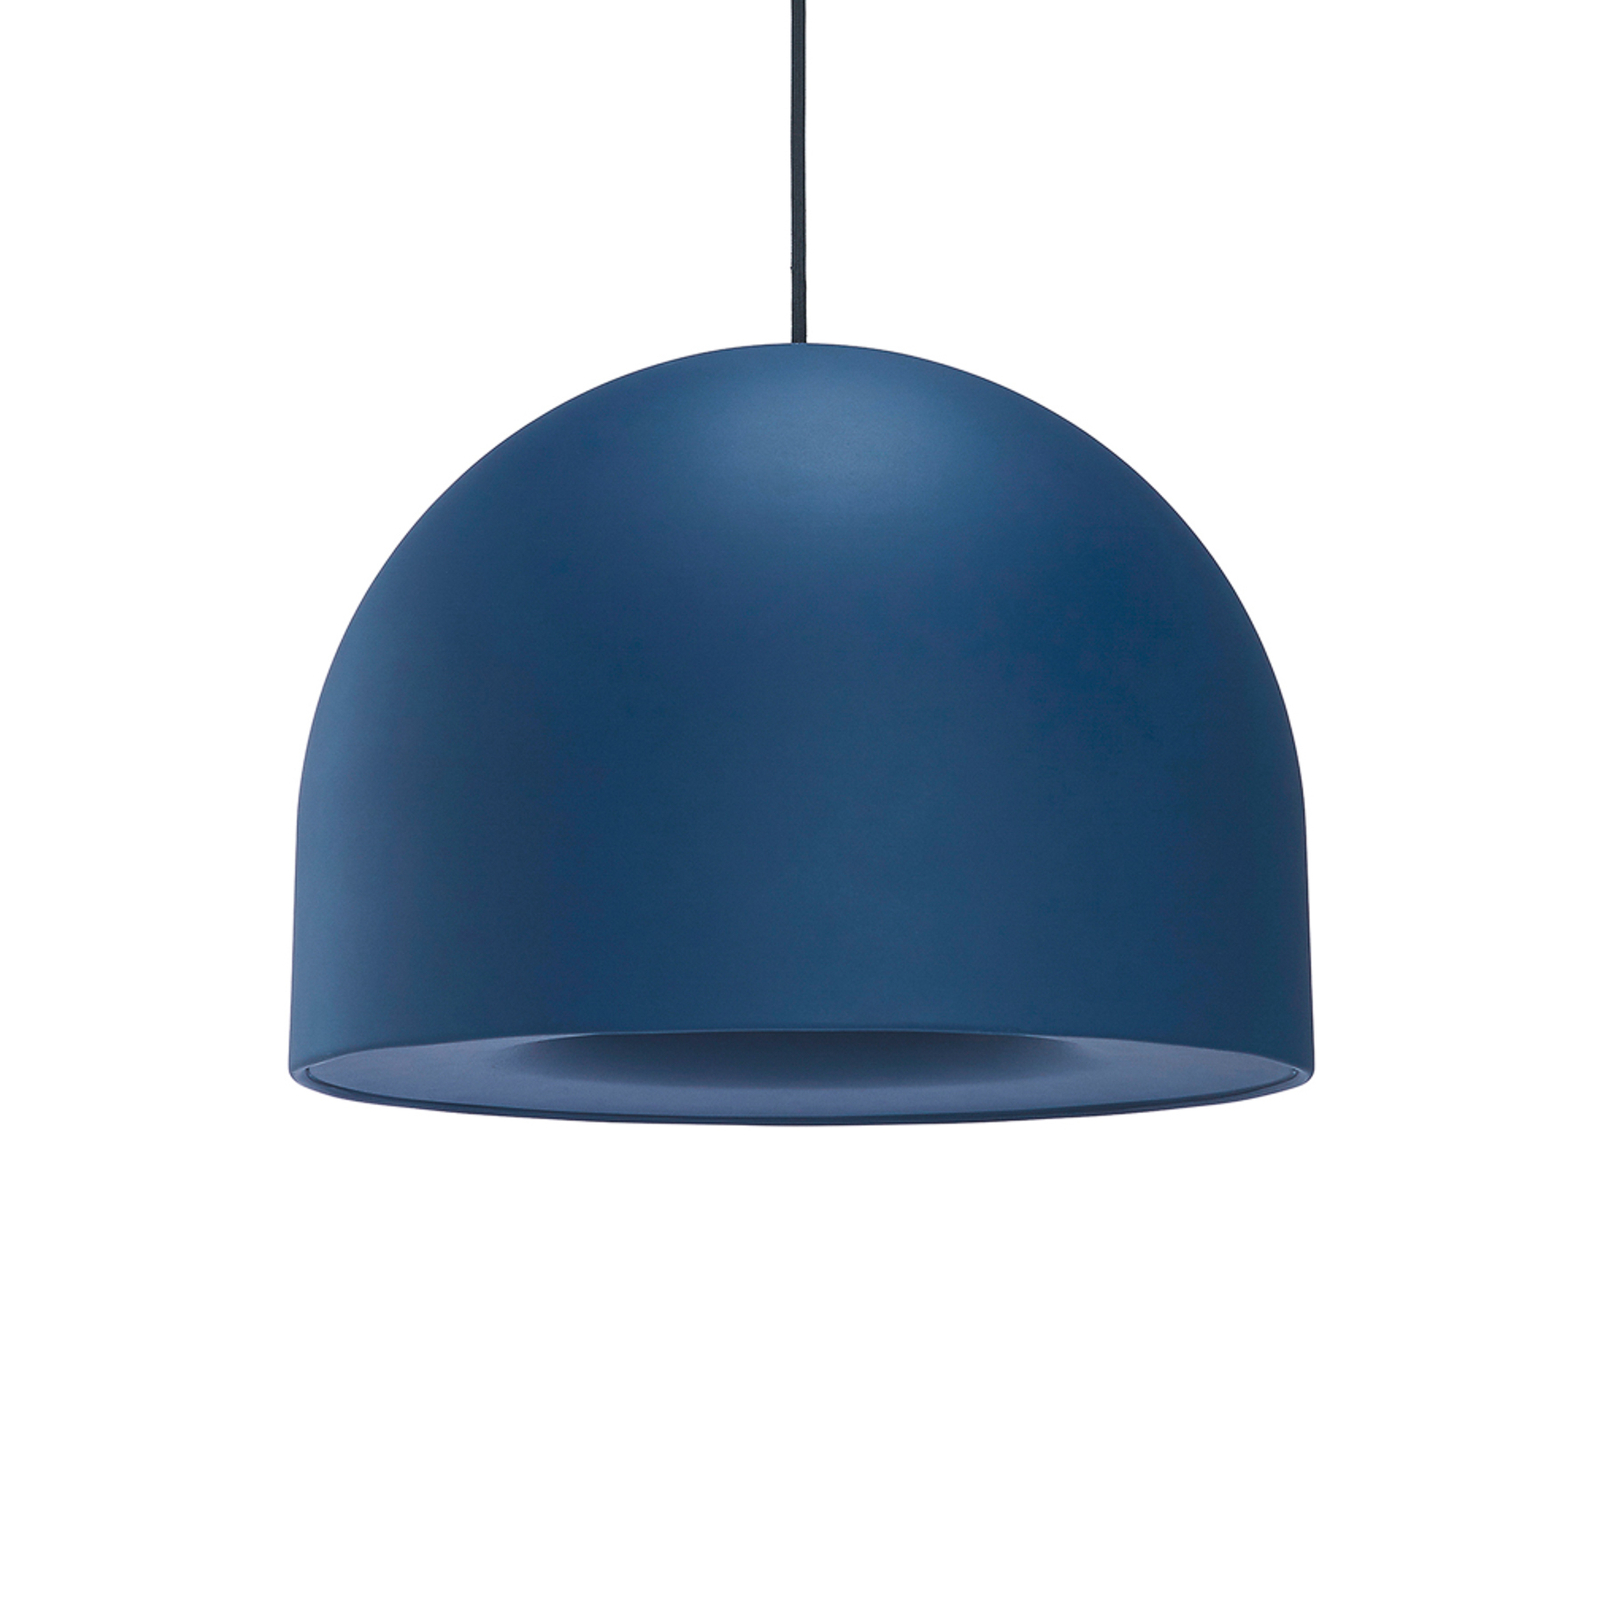 PR Home Norp hanglamp Ø 40 cm blauw